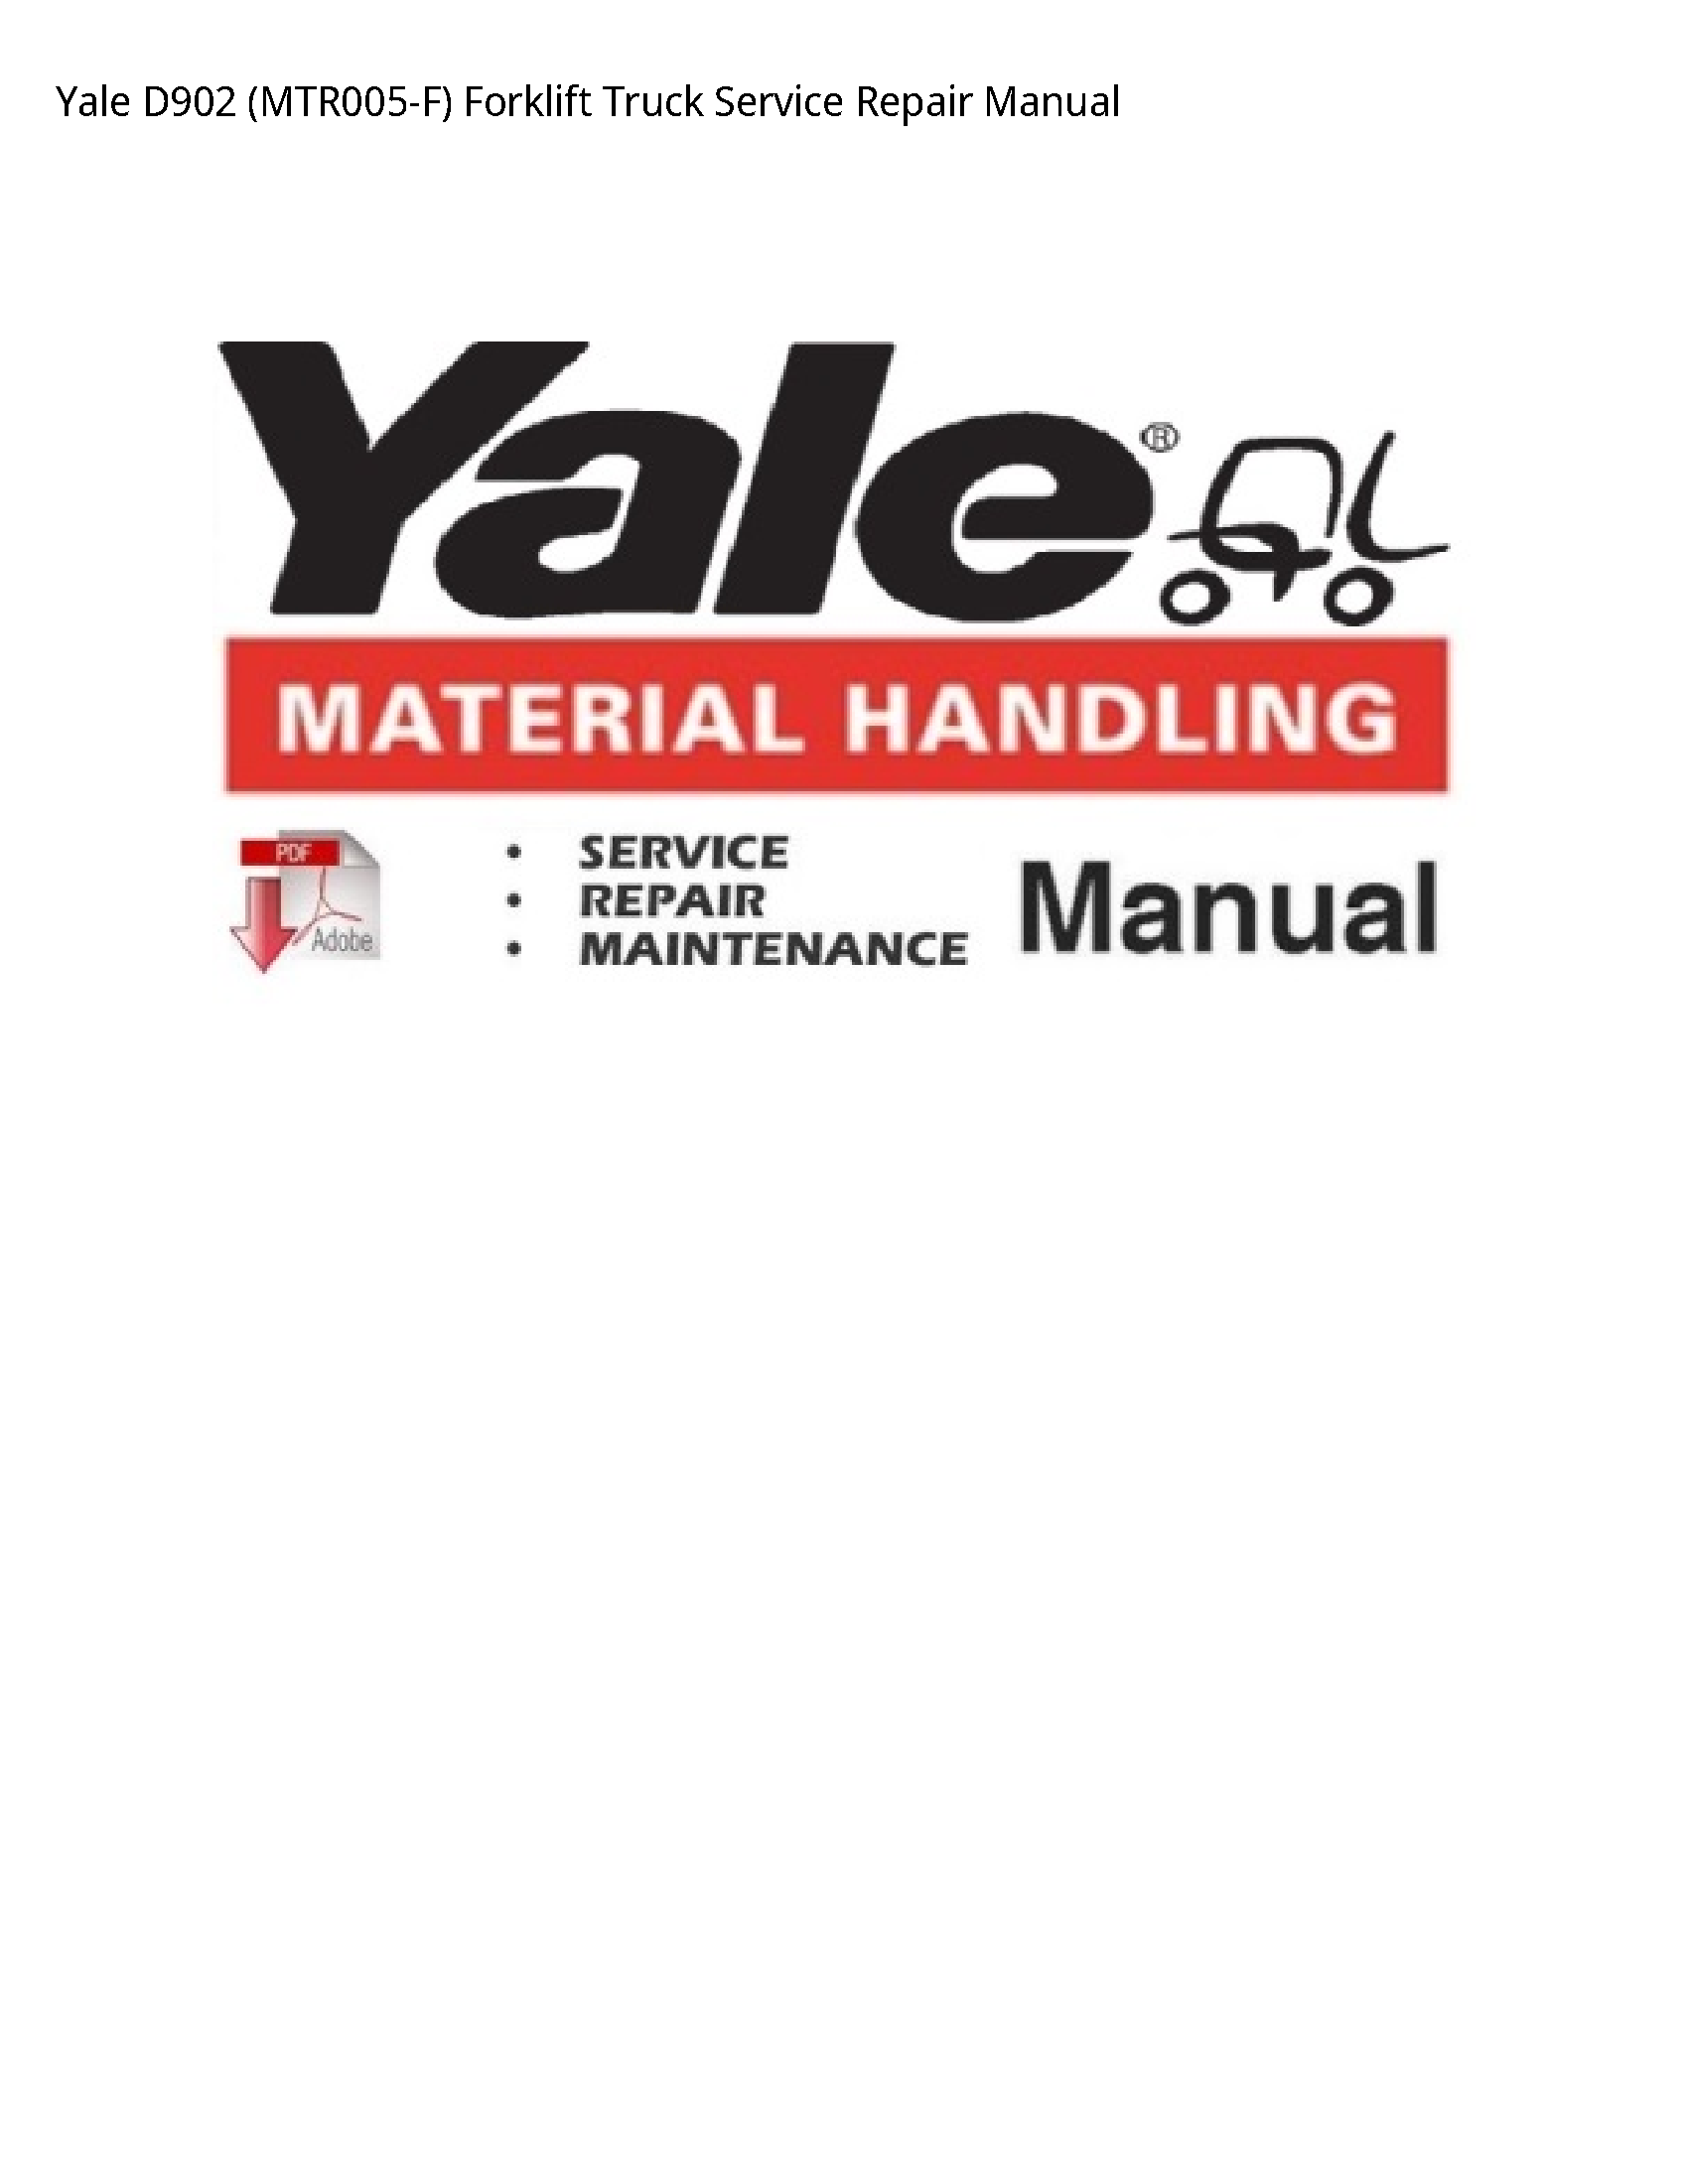 Yale D902 Forklift Truck manual